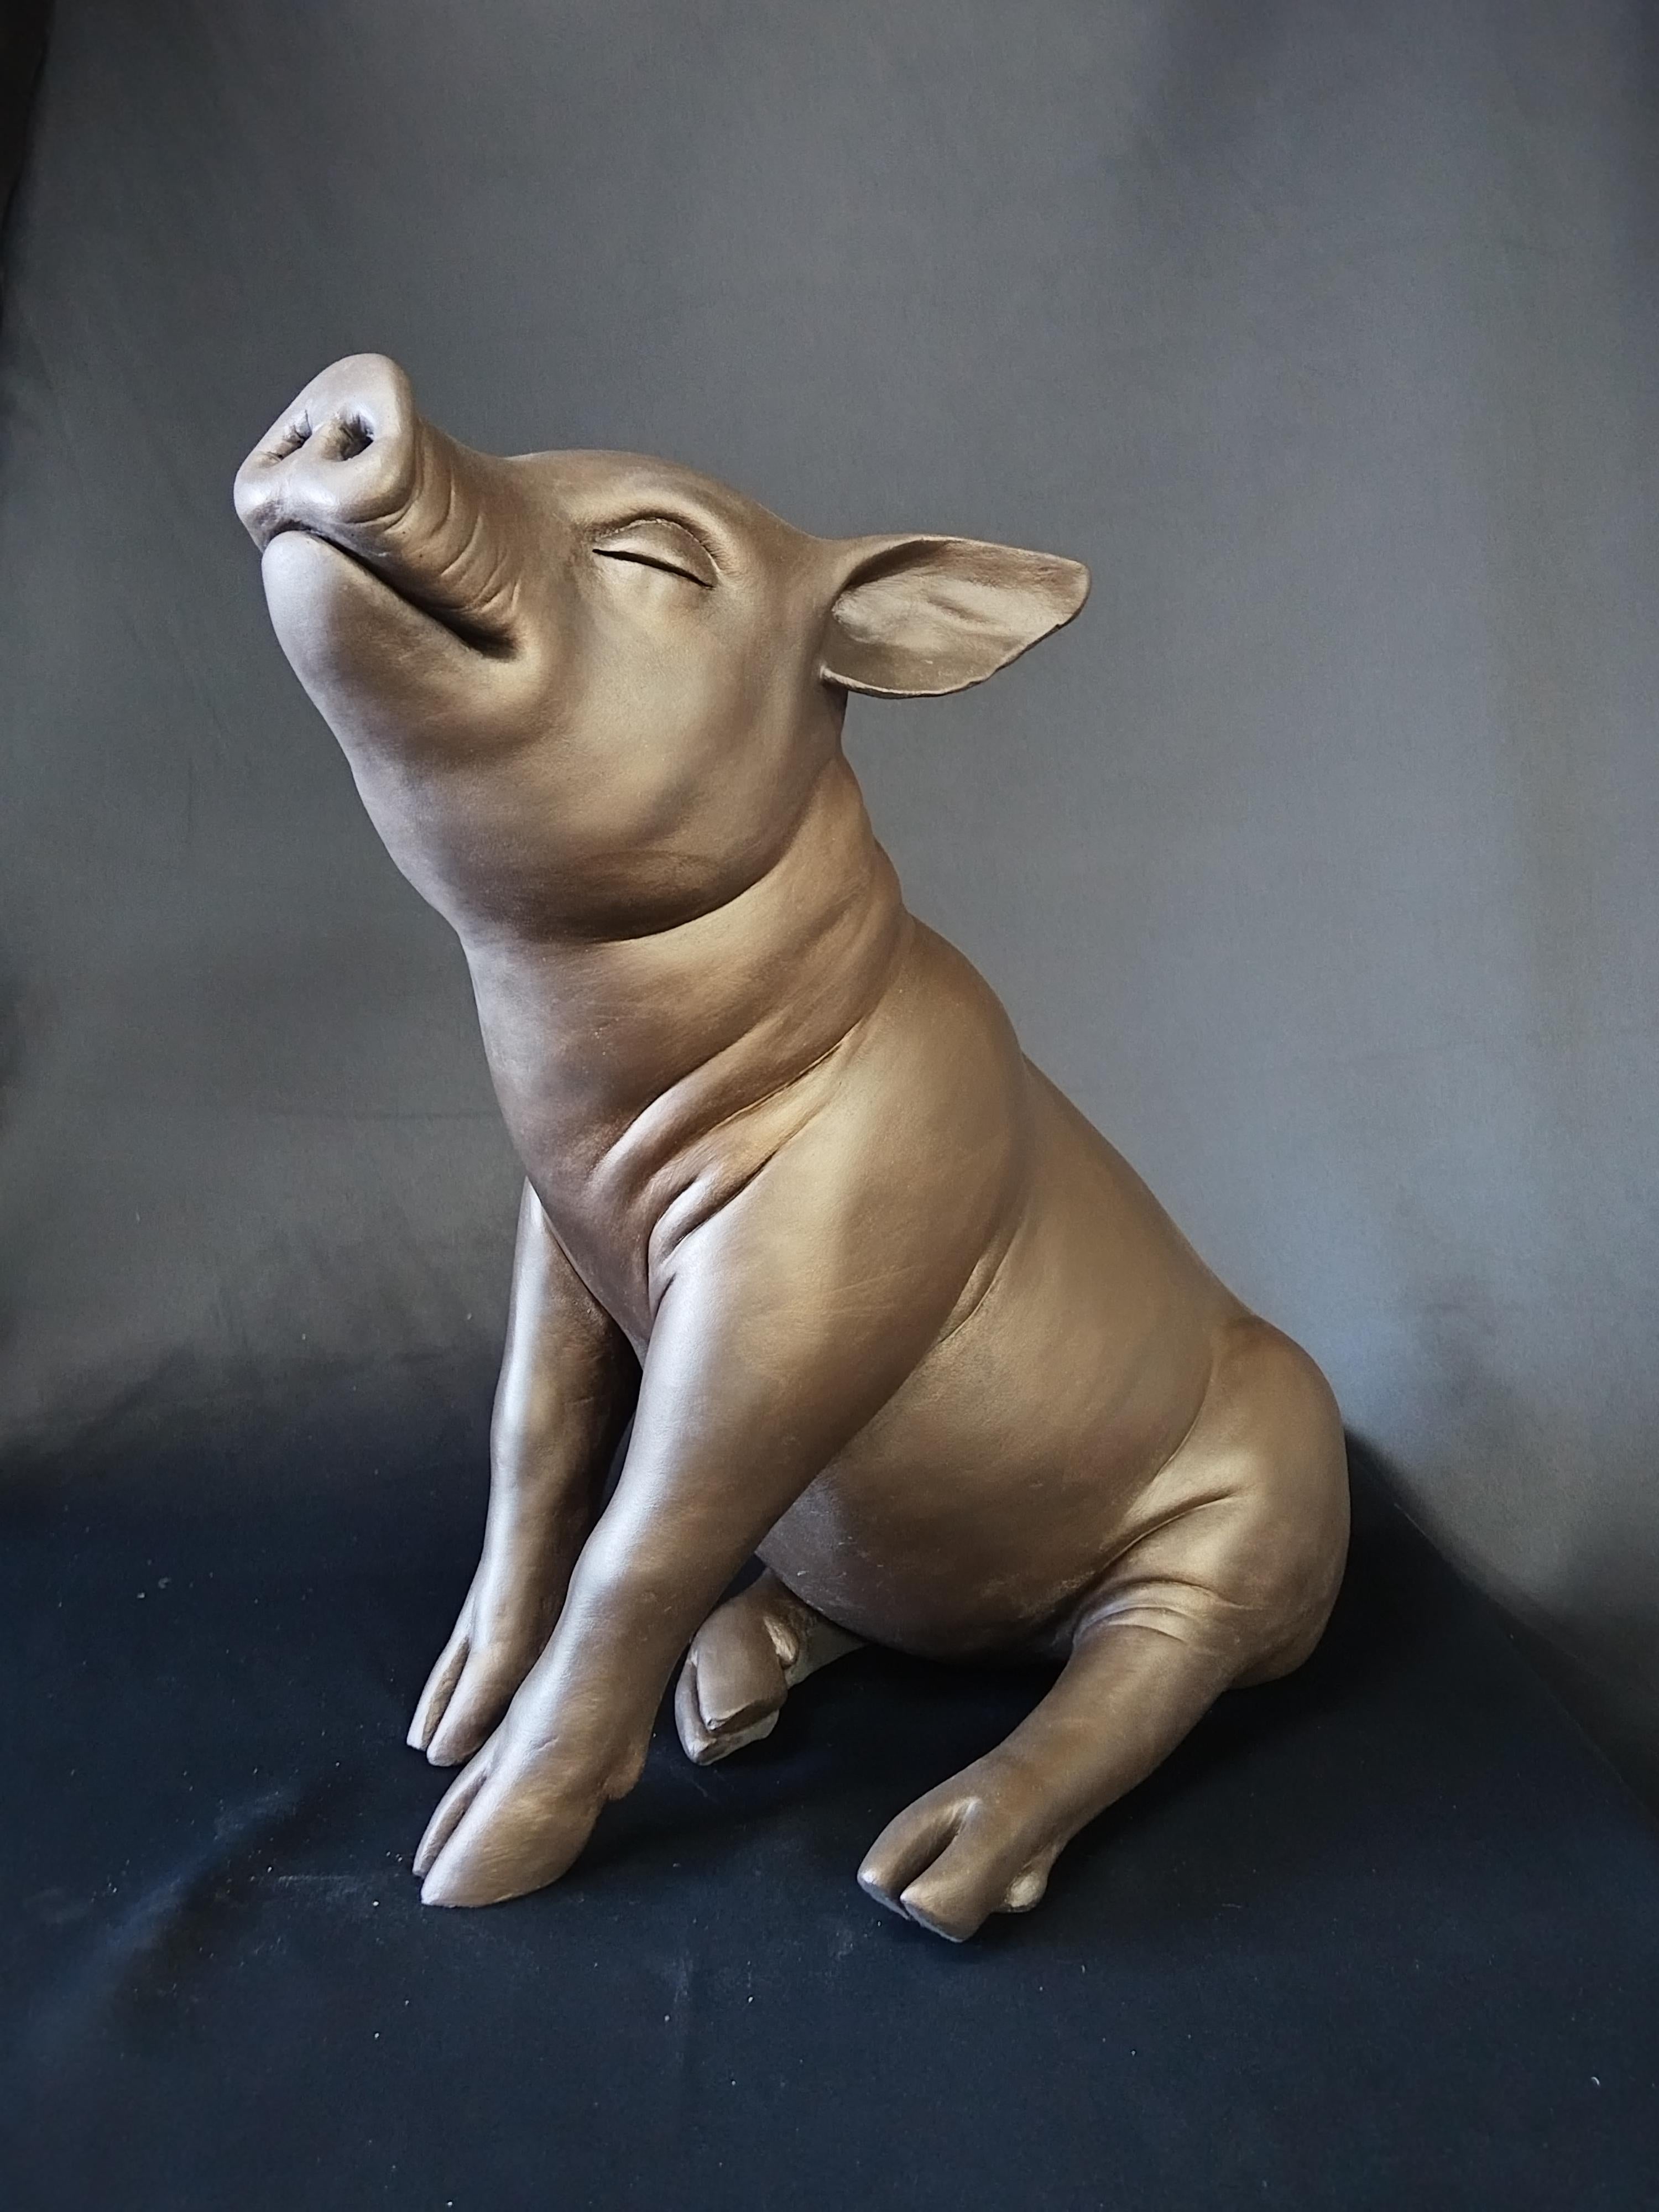 Life Size Limited Edition Bronze Sculpture "Piglet"